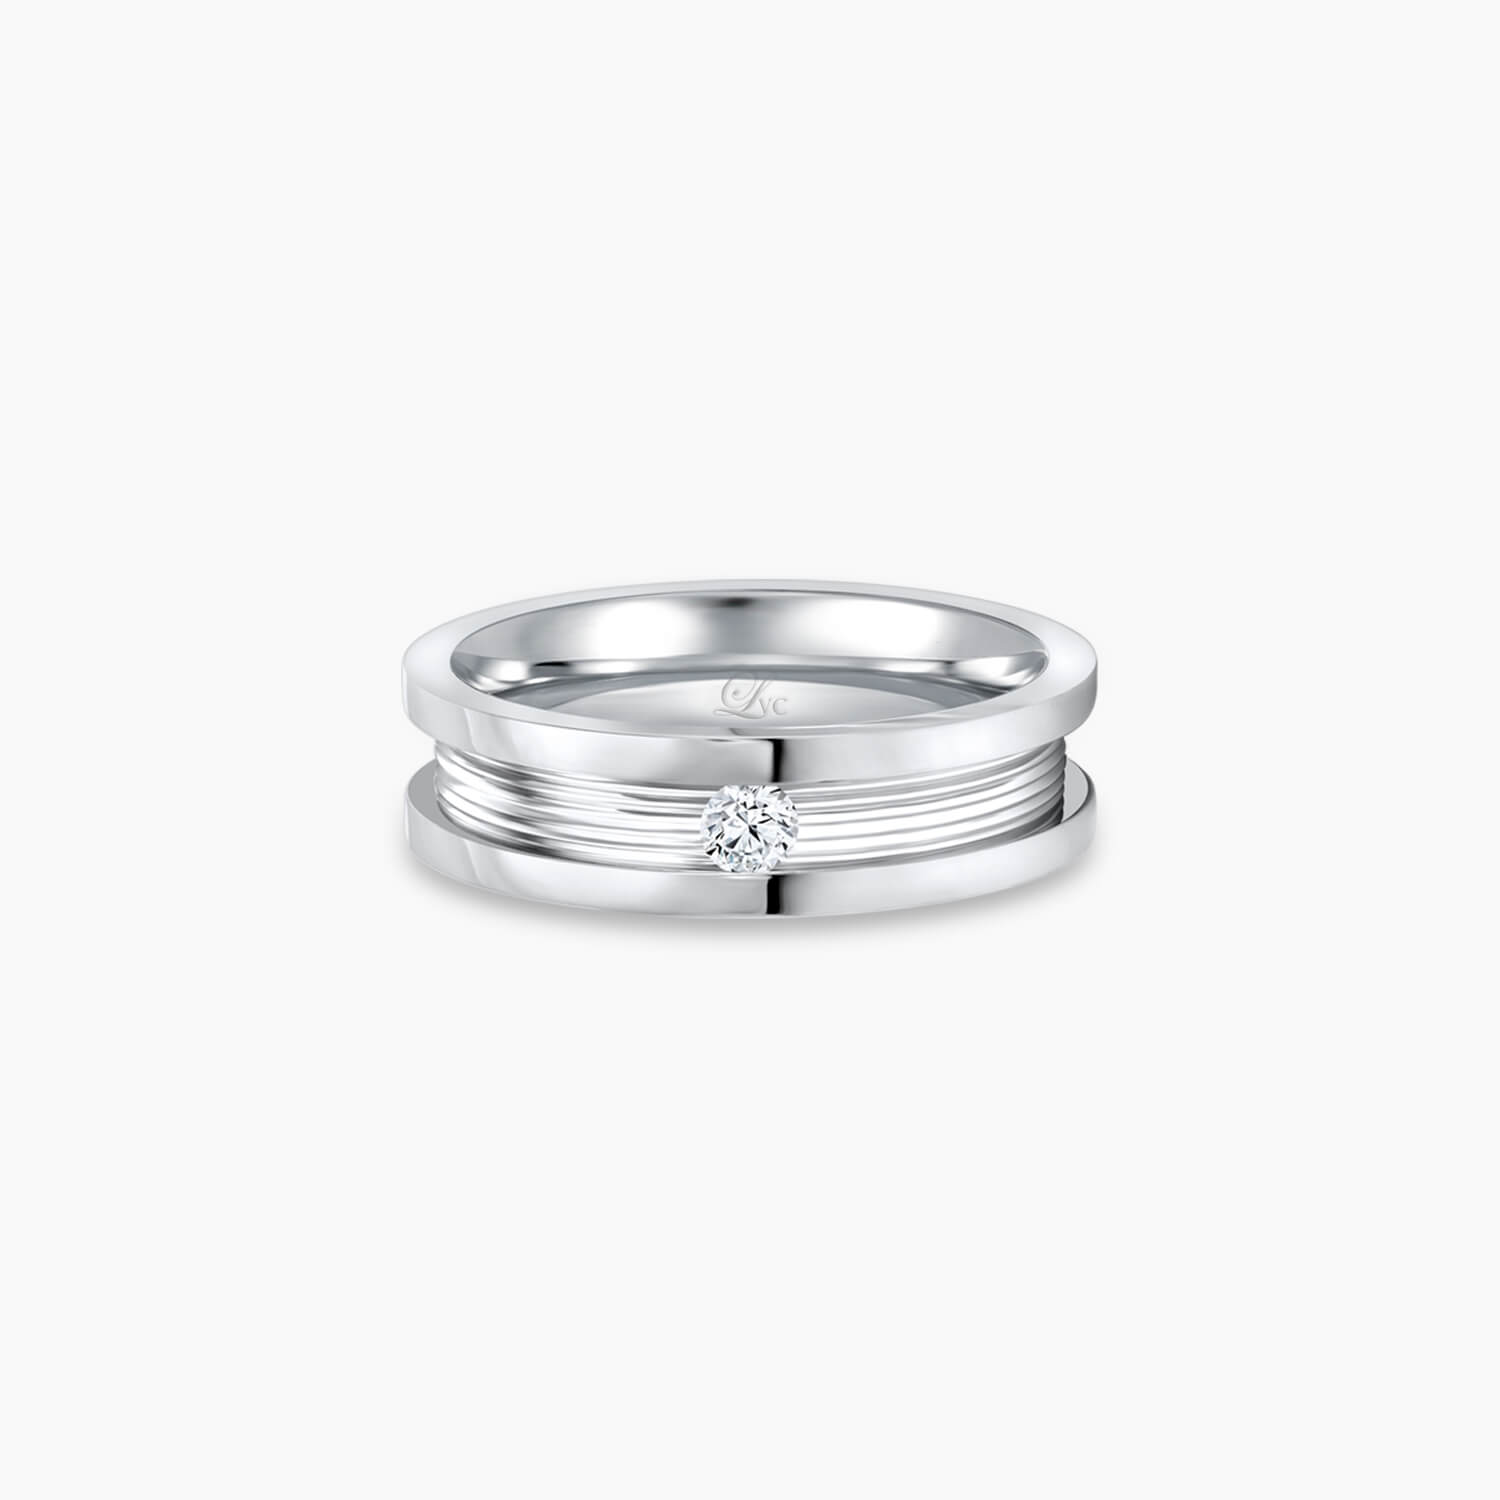 idea hadiah hantaran kahwin untuk wanita cincin berlian LvcPromise One Wedding Band in White Gold with Center Diamond Solitaire